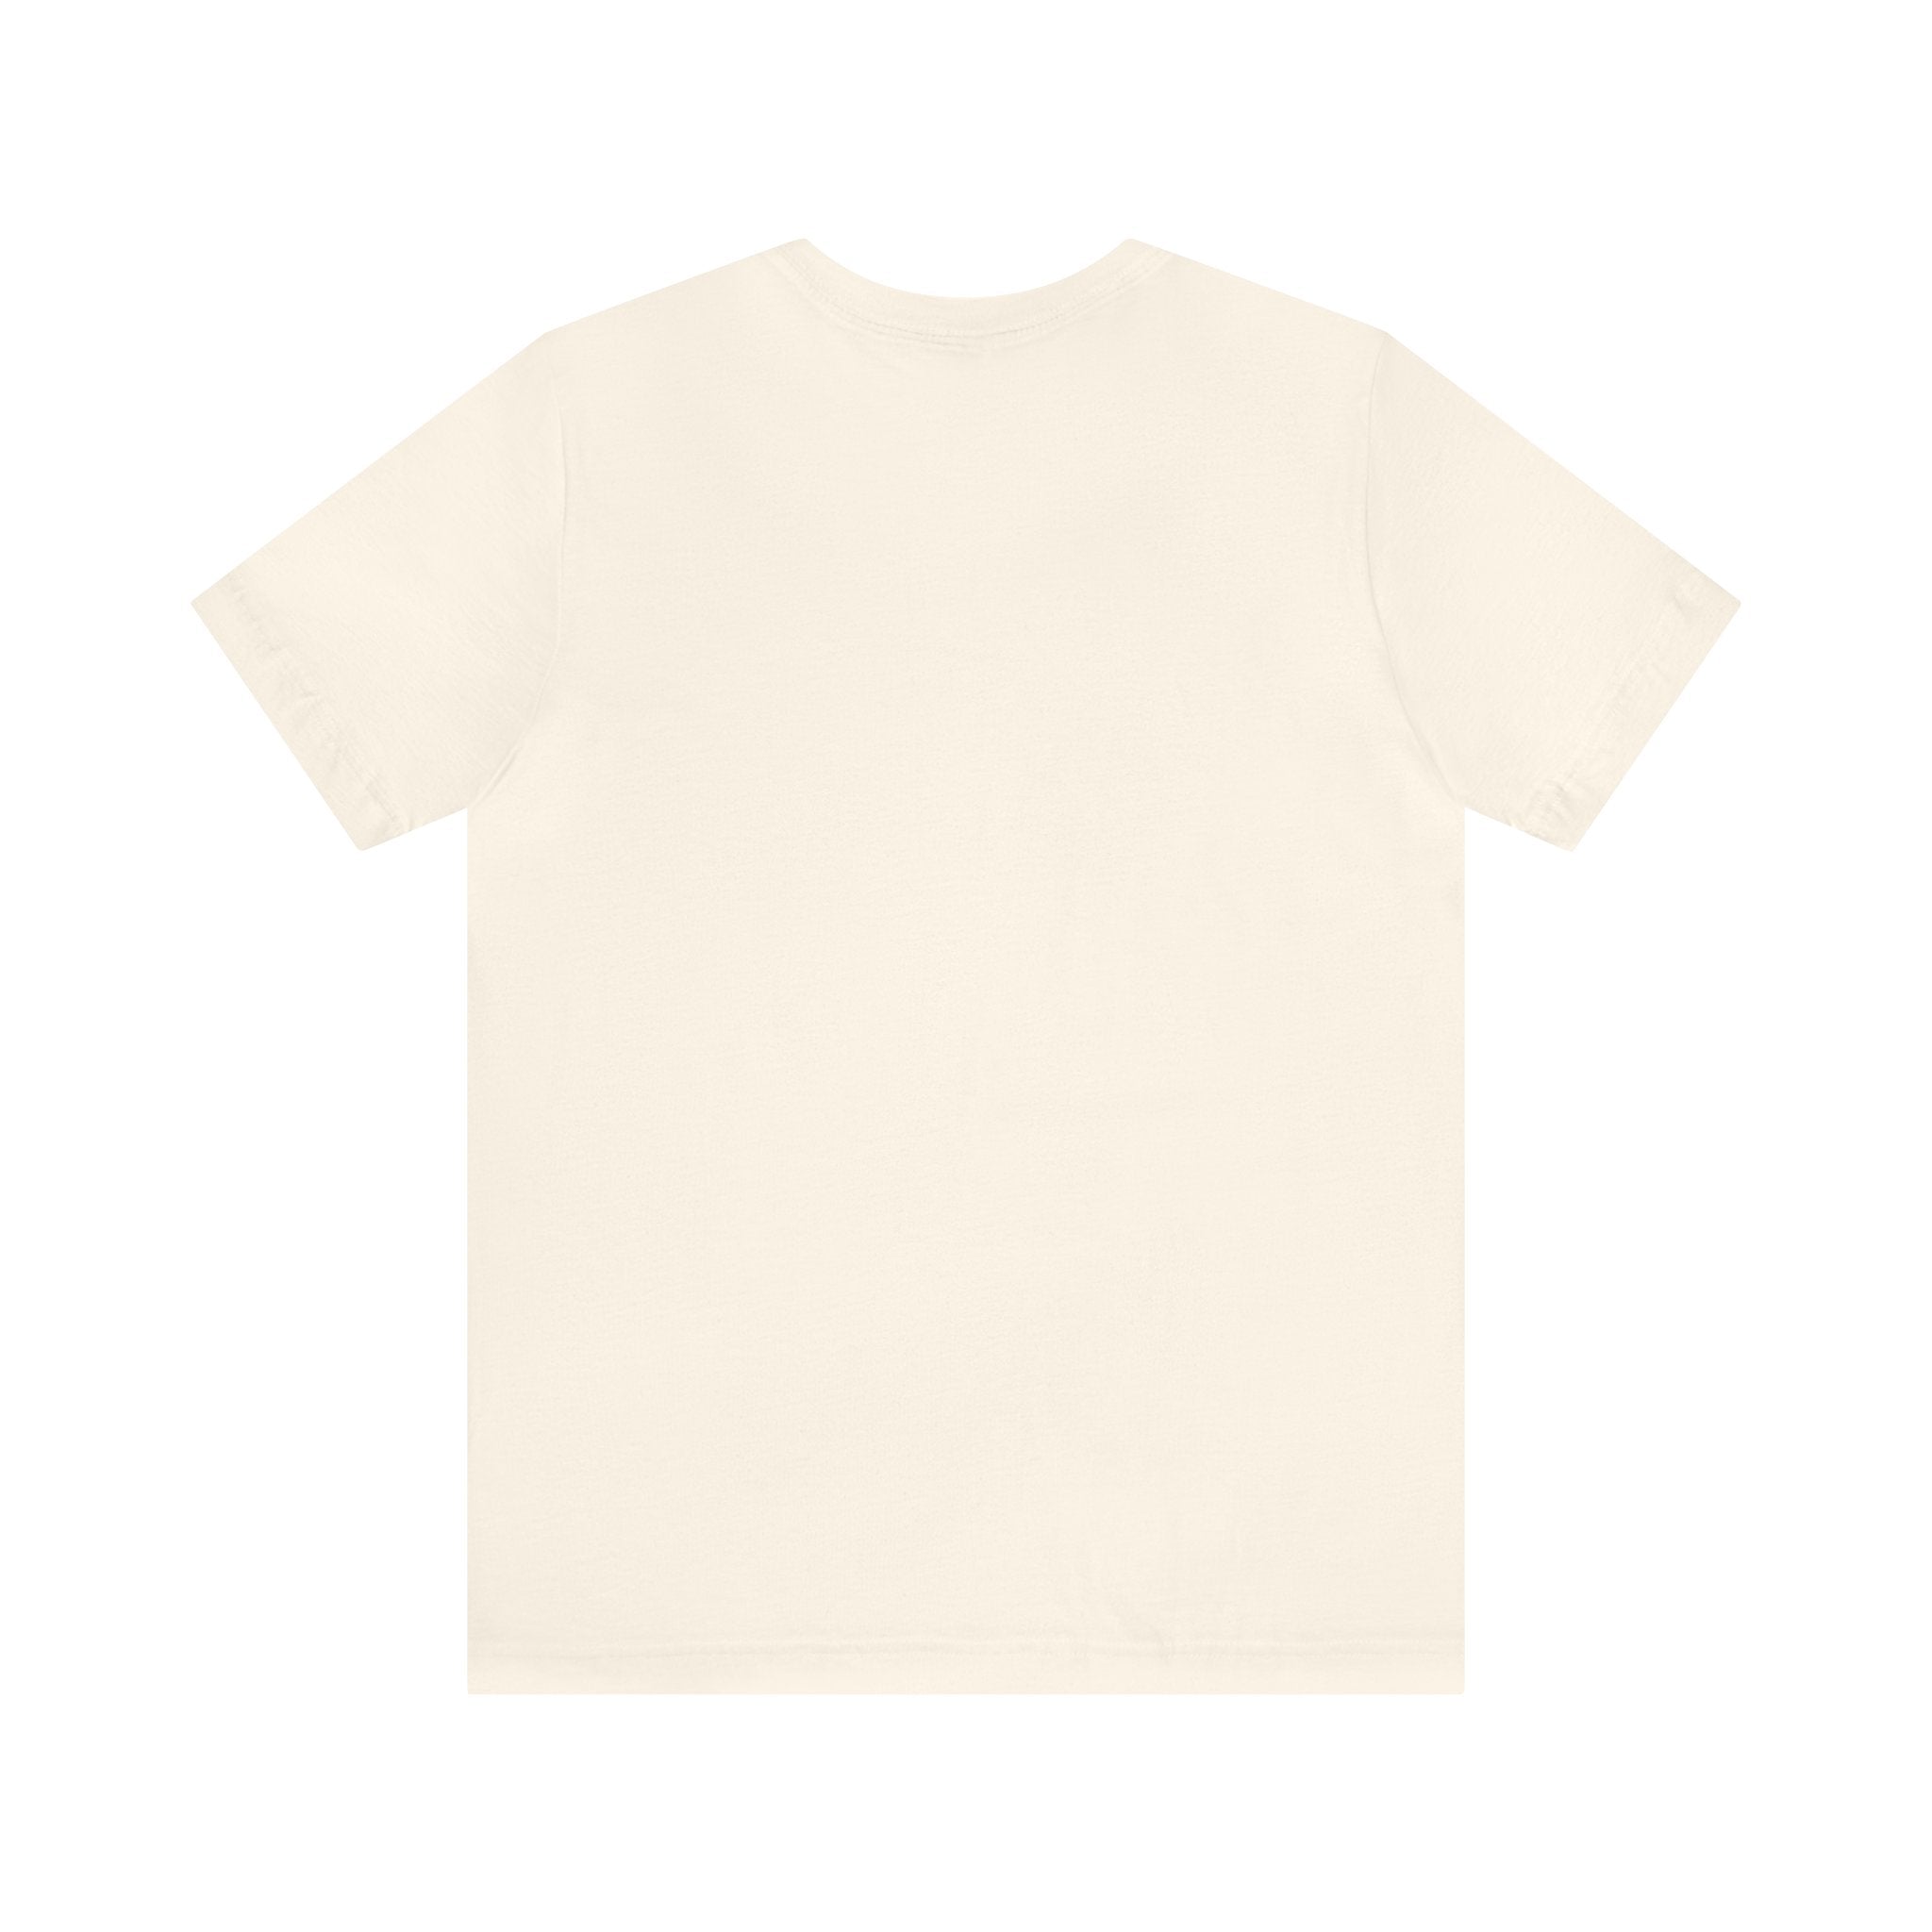 hypersnozified clumpageatronixx - t-shirt